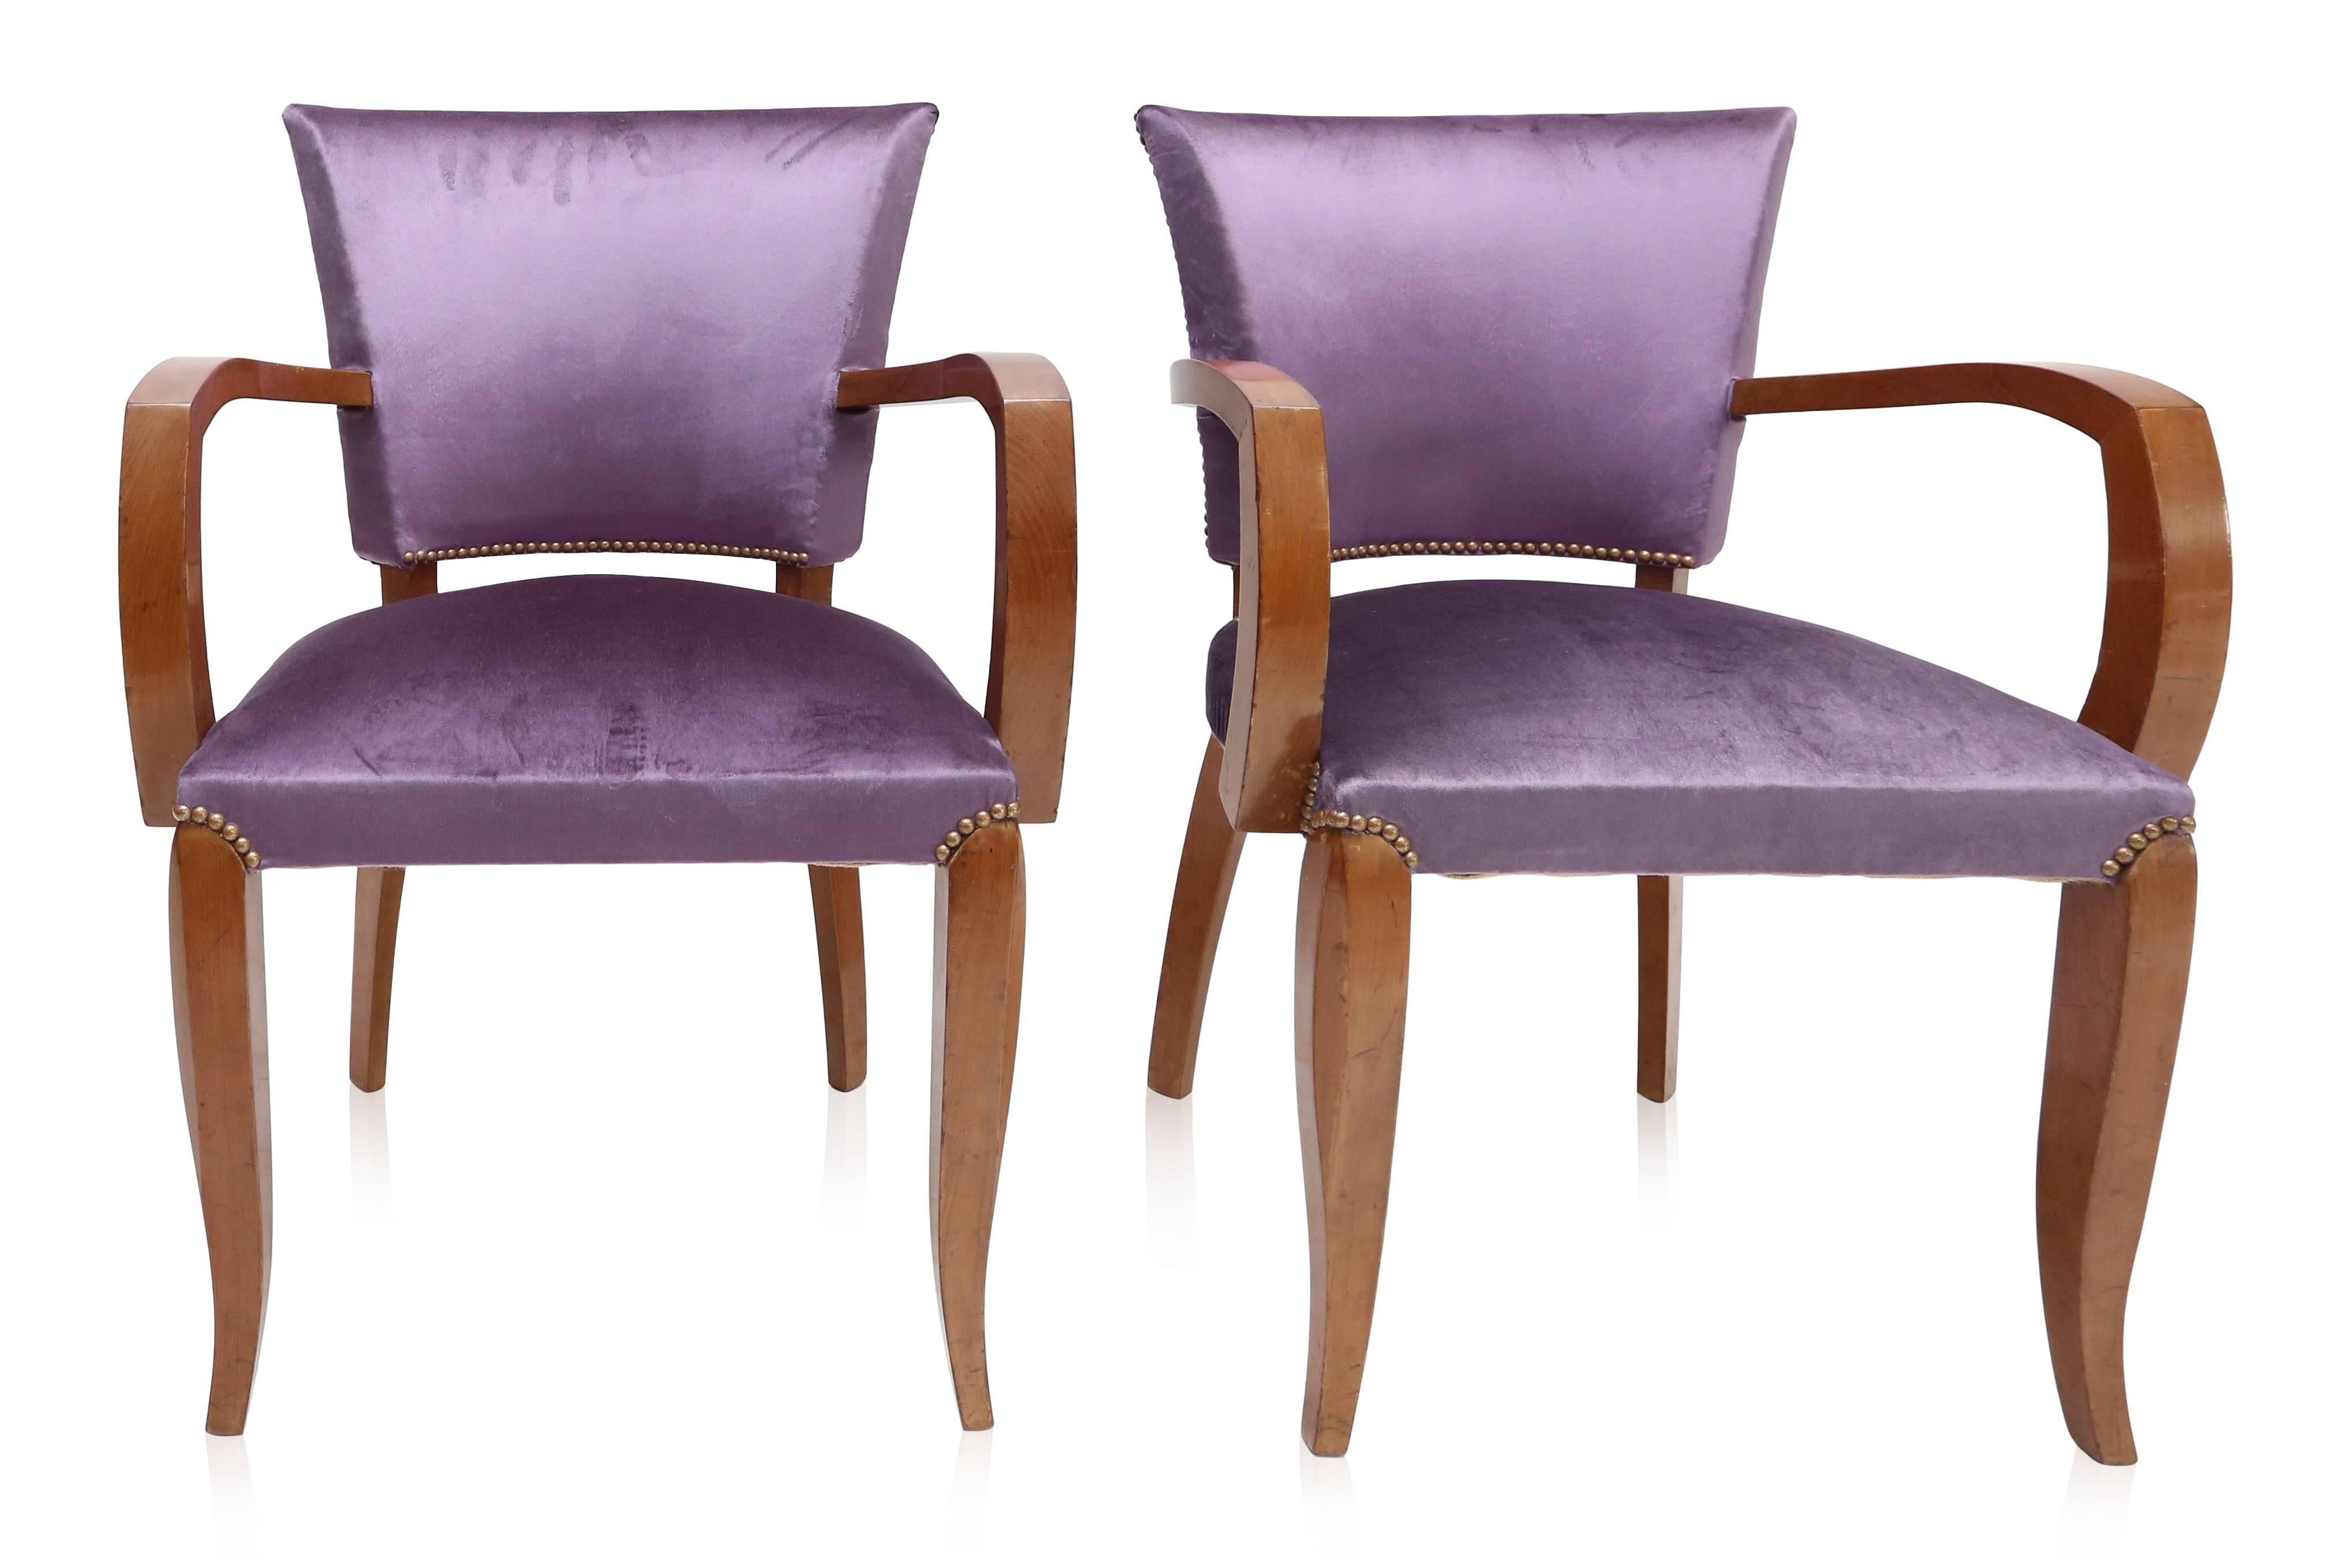 Belgian Mahogany Art Deco armchairs with purple velvet upholstery